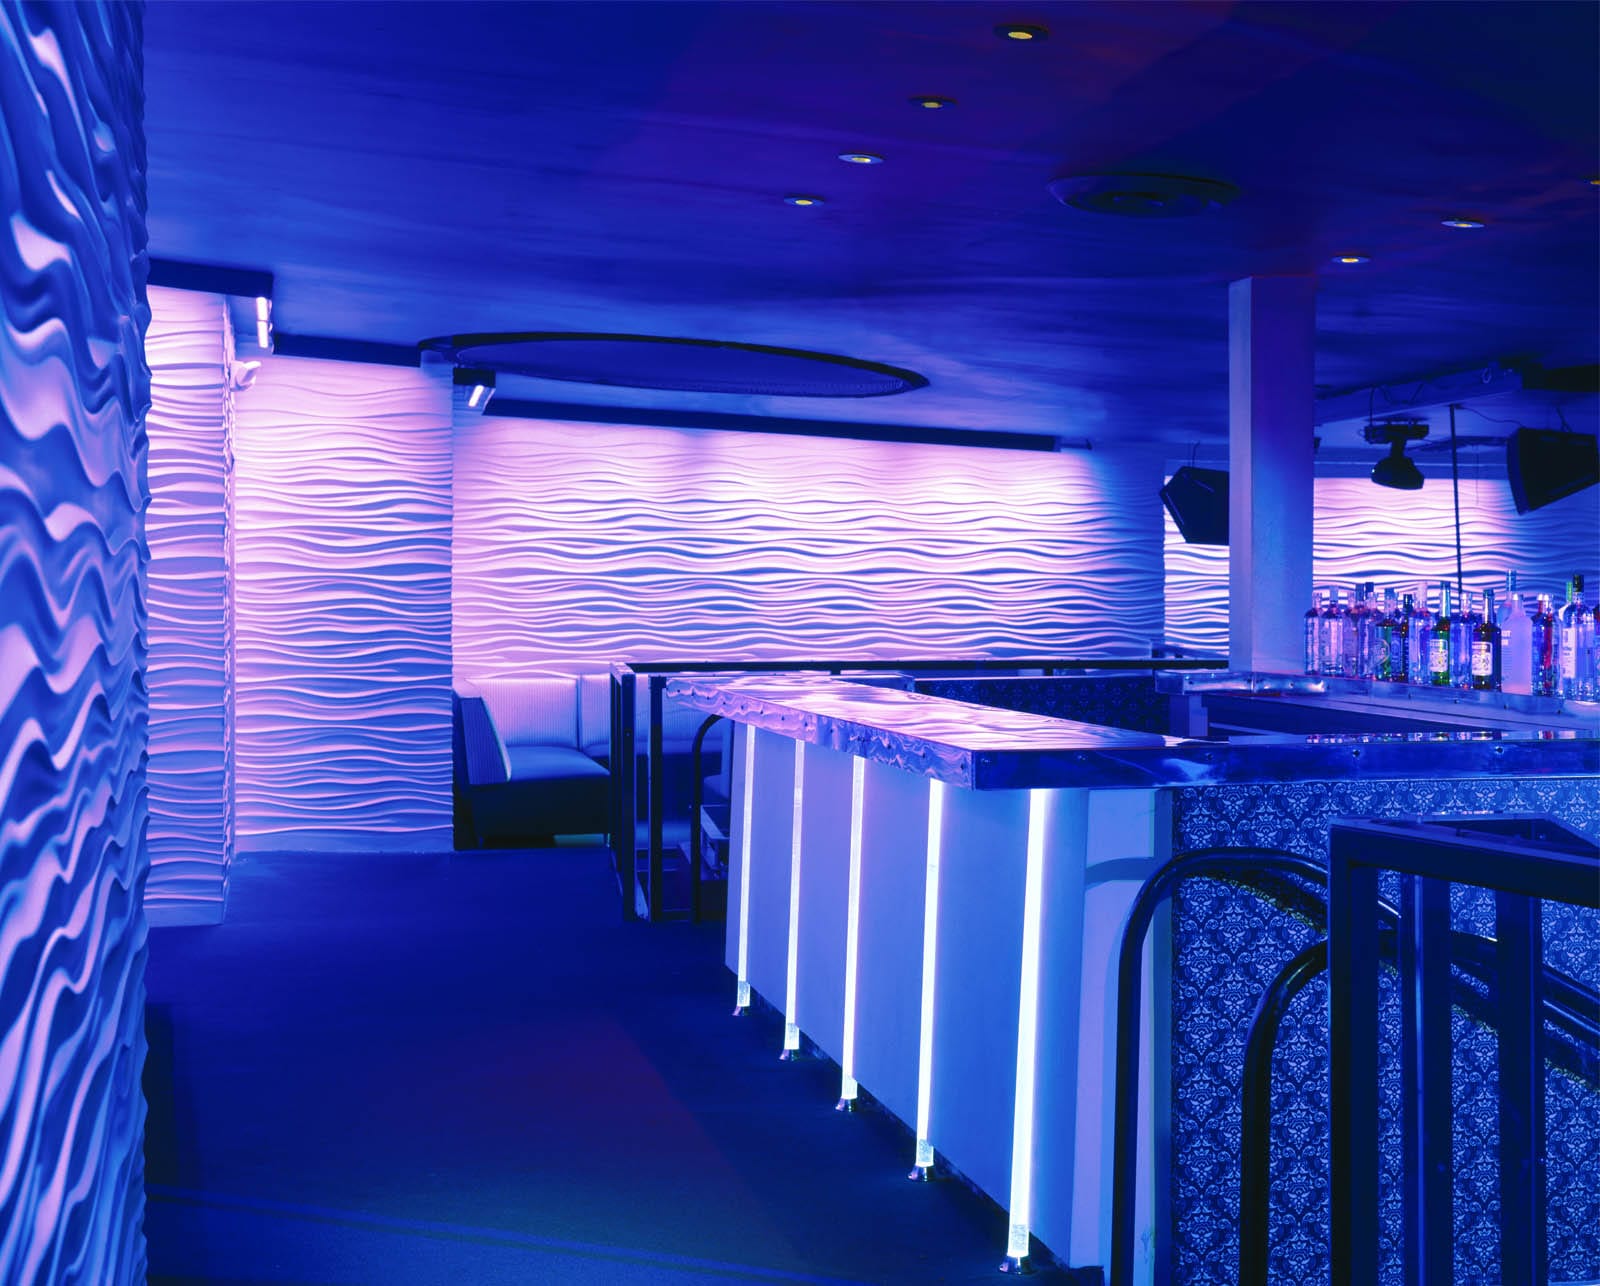 Cameo Nightclub - Hotel, Restaurant & Nightclub Design by Big Time